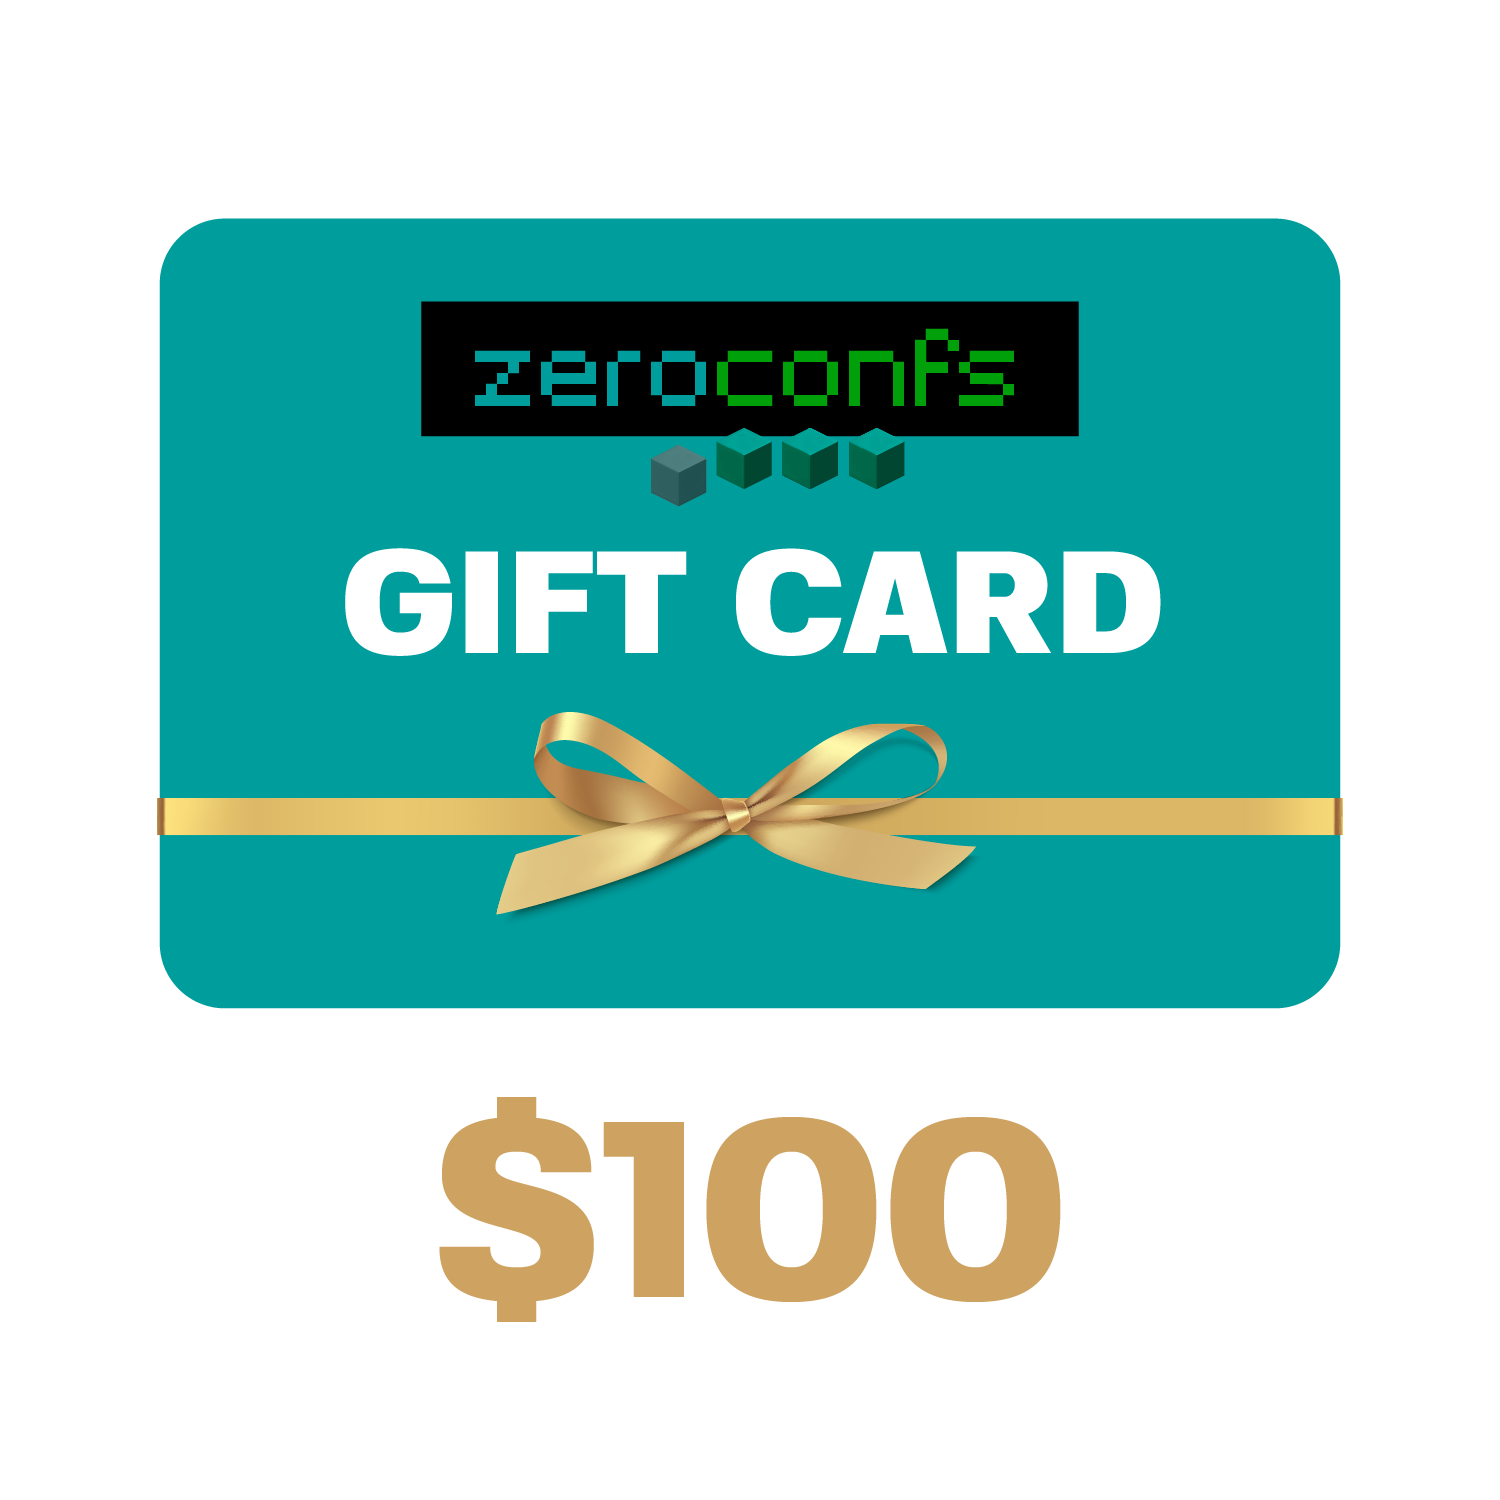 Gift Card Gift Cards zeroconfs $100 USD  